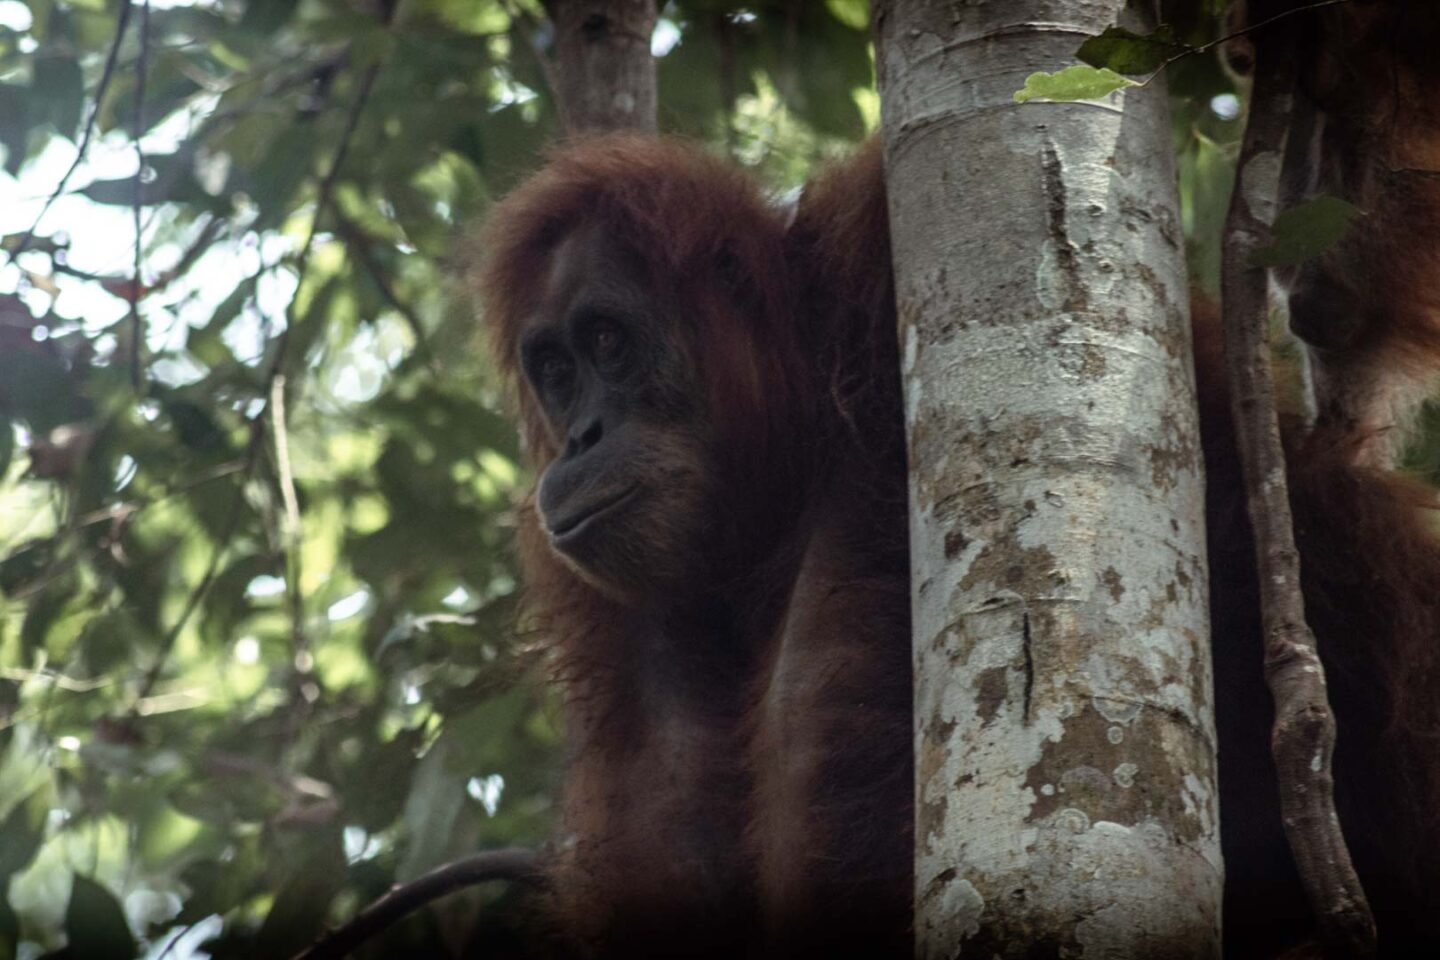 Female orangutan in Gunung Leuser National Park, Indonesia